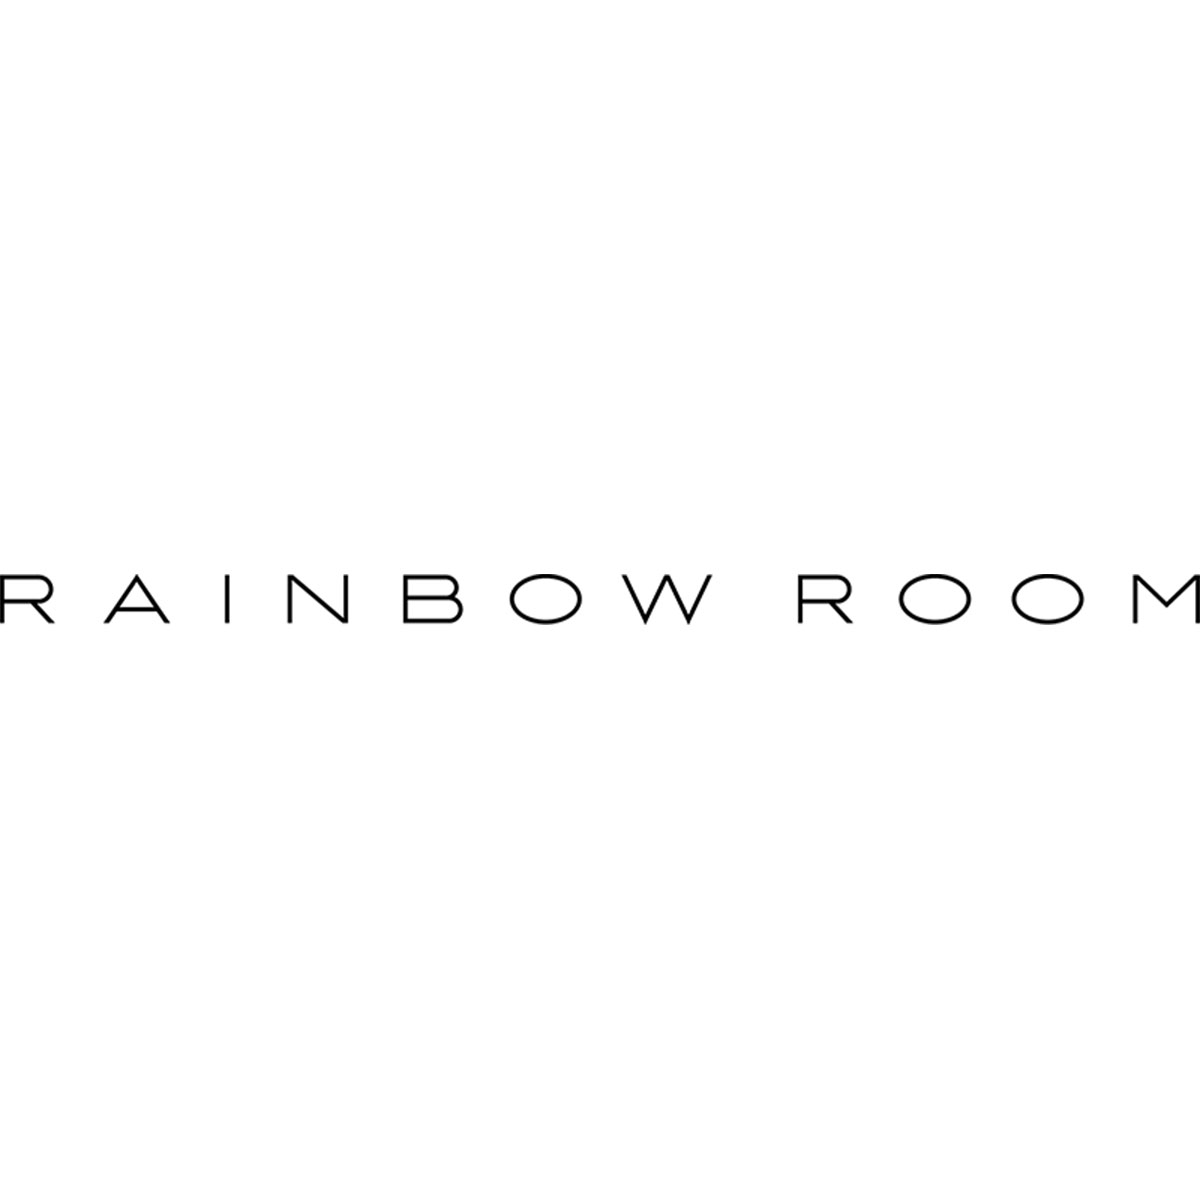 rainbow-room-logo-logo.jpg